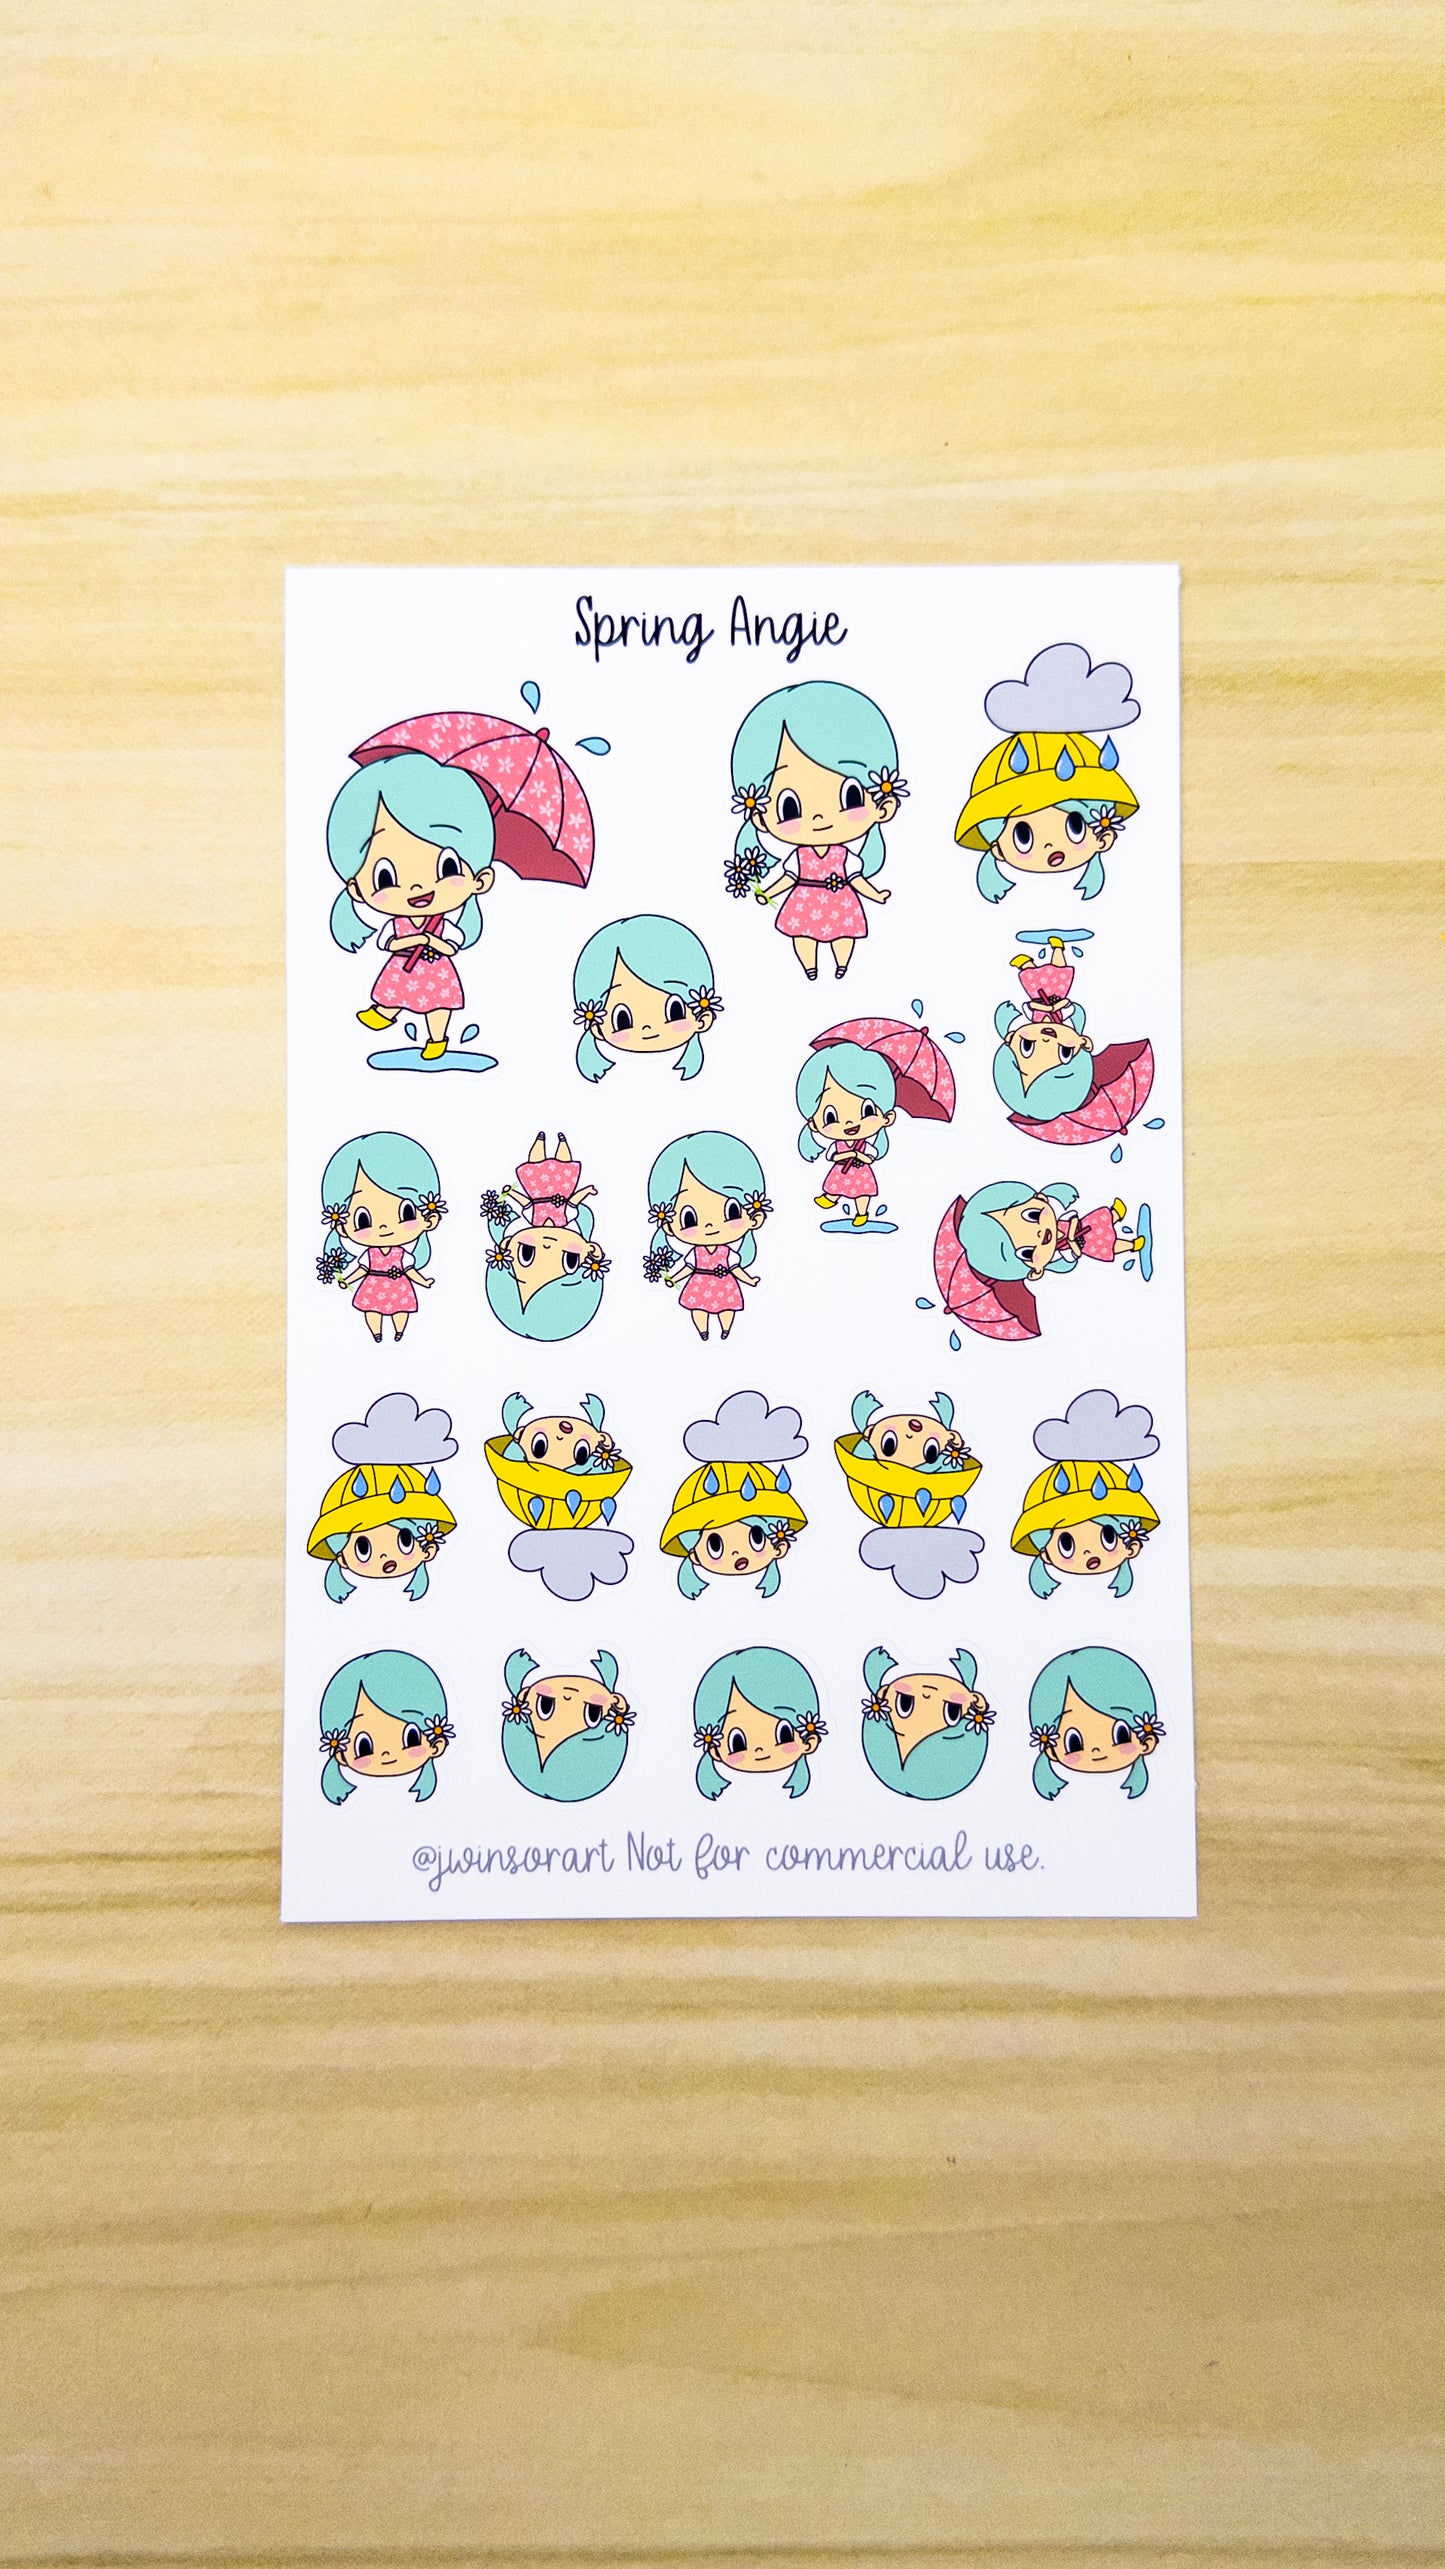 Seasonal Angie Planner Sticker Sheet Winter Spring Summer Fall Autumn Bujo Cute Kawaii Chibi Girl